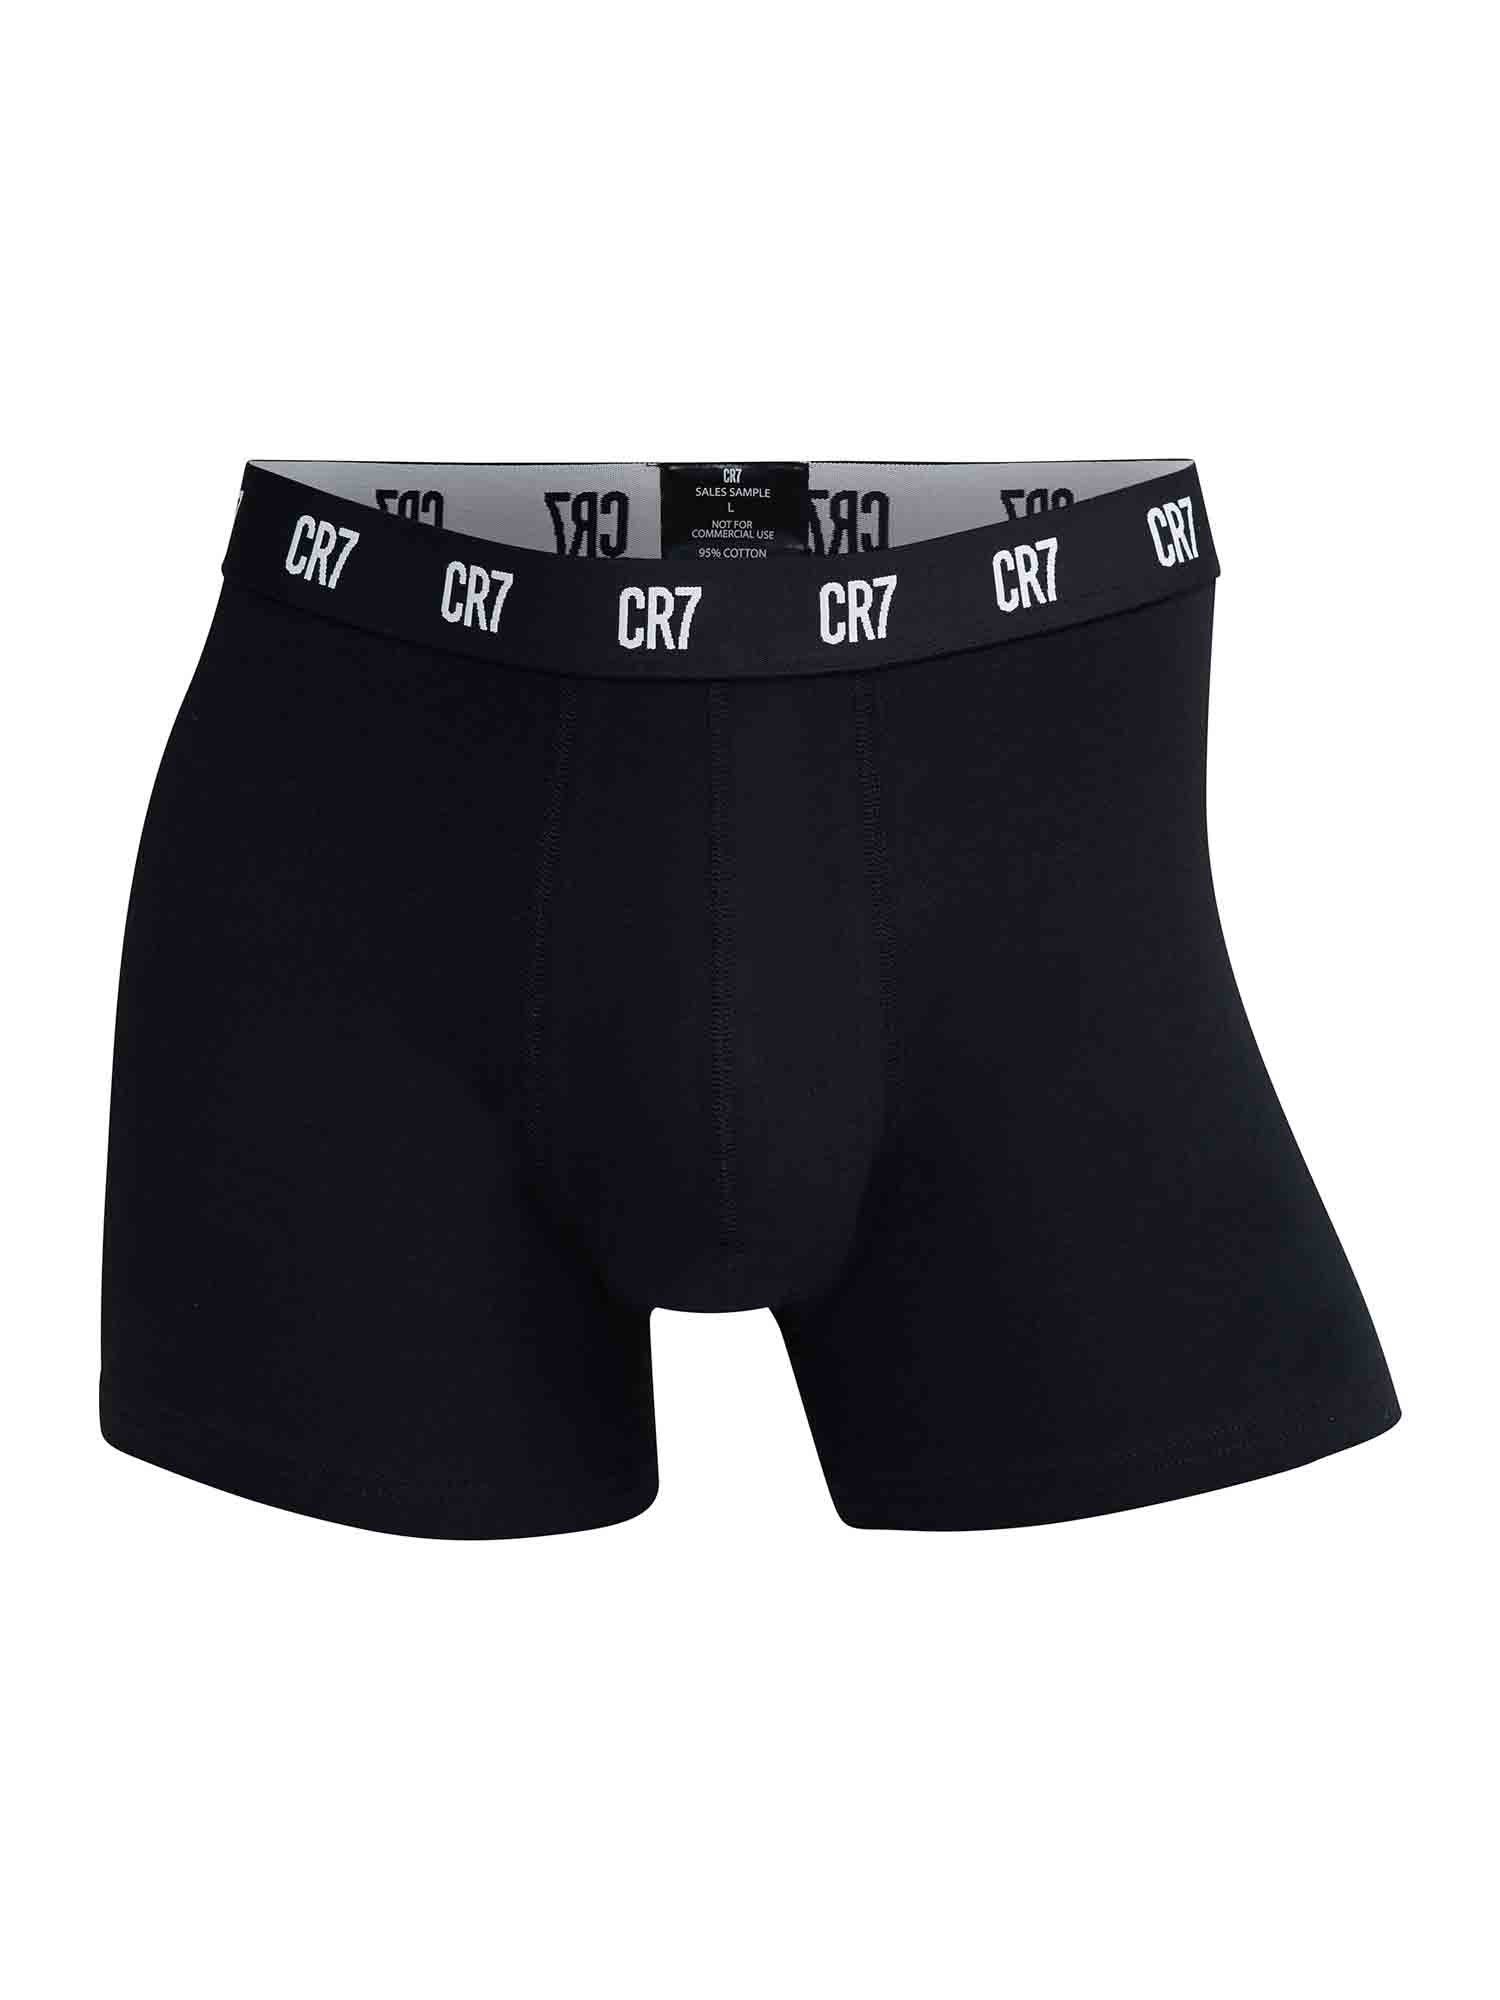 Retro CR7 Boxershorts Männer Pants 17 Multi Pants (5-St) Retro Herren Multipack Trunks